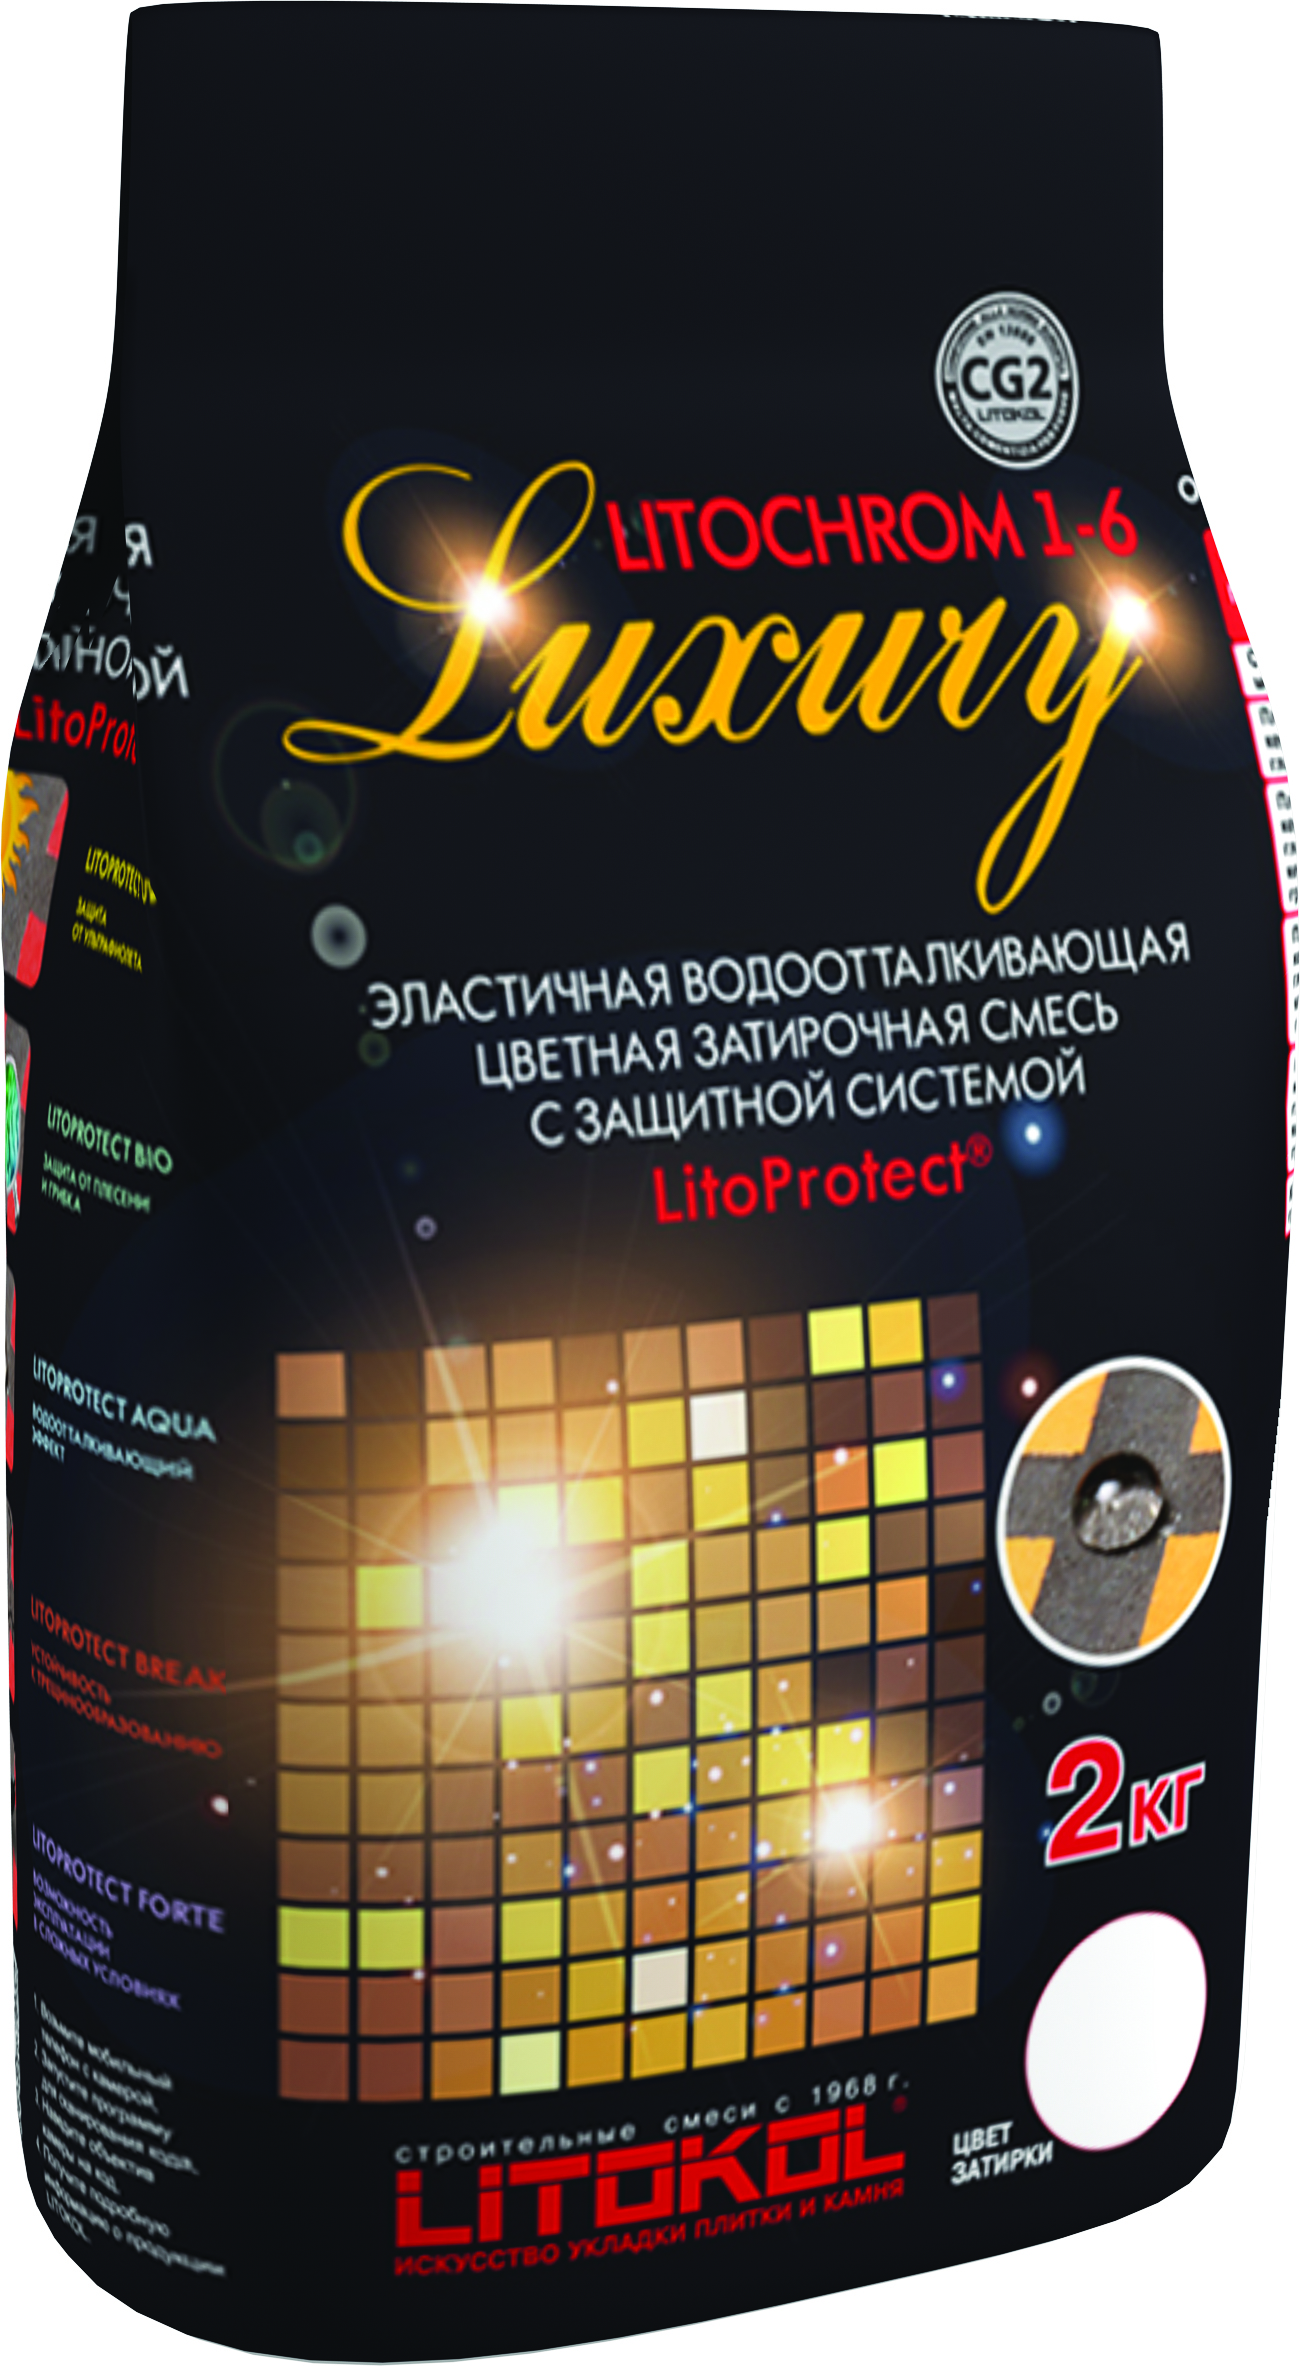 Купить Litokol Litochrom 1-6 Luxury C.700, 2 кг